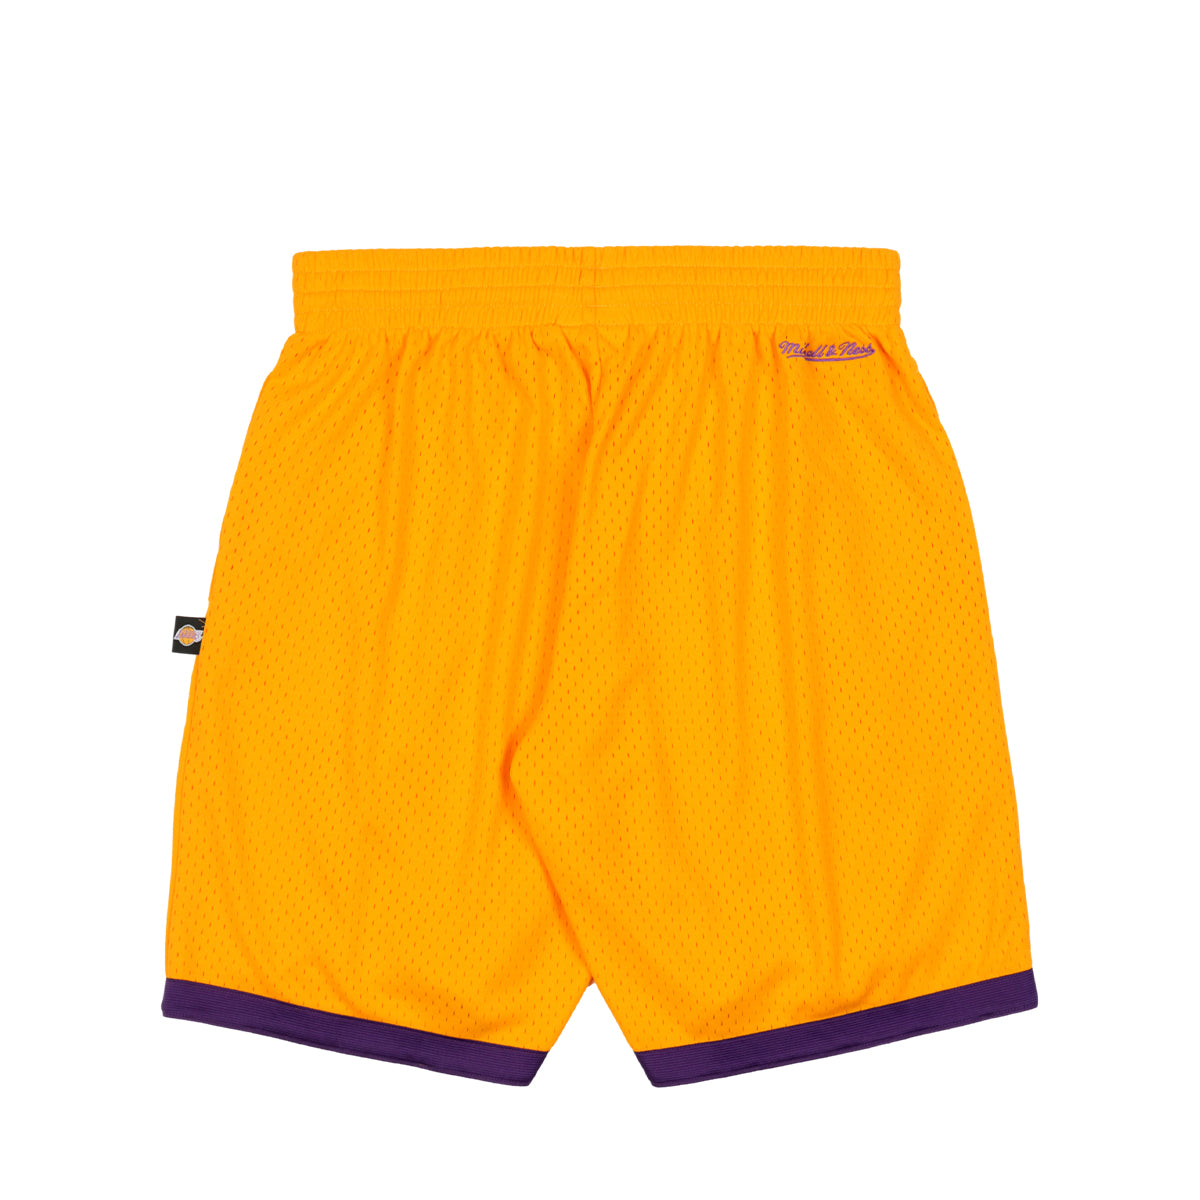 Takashi Murakami ComplexCon x LA Lakers M&N Basketball Shorts